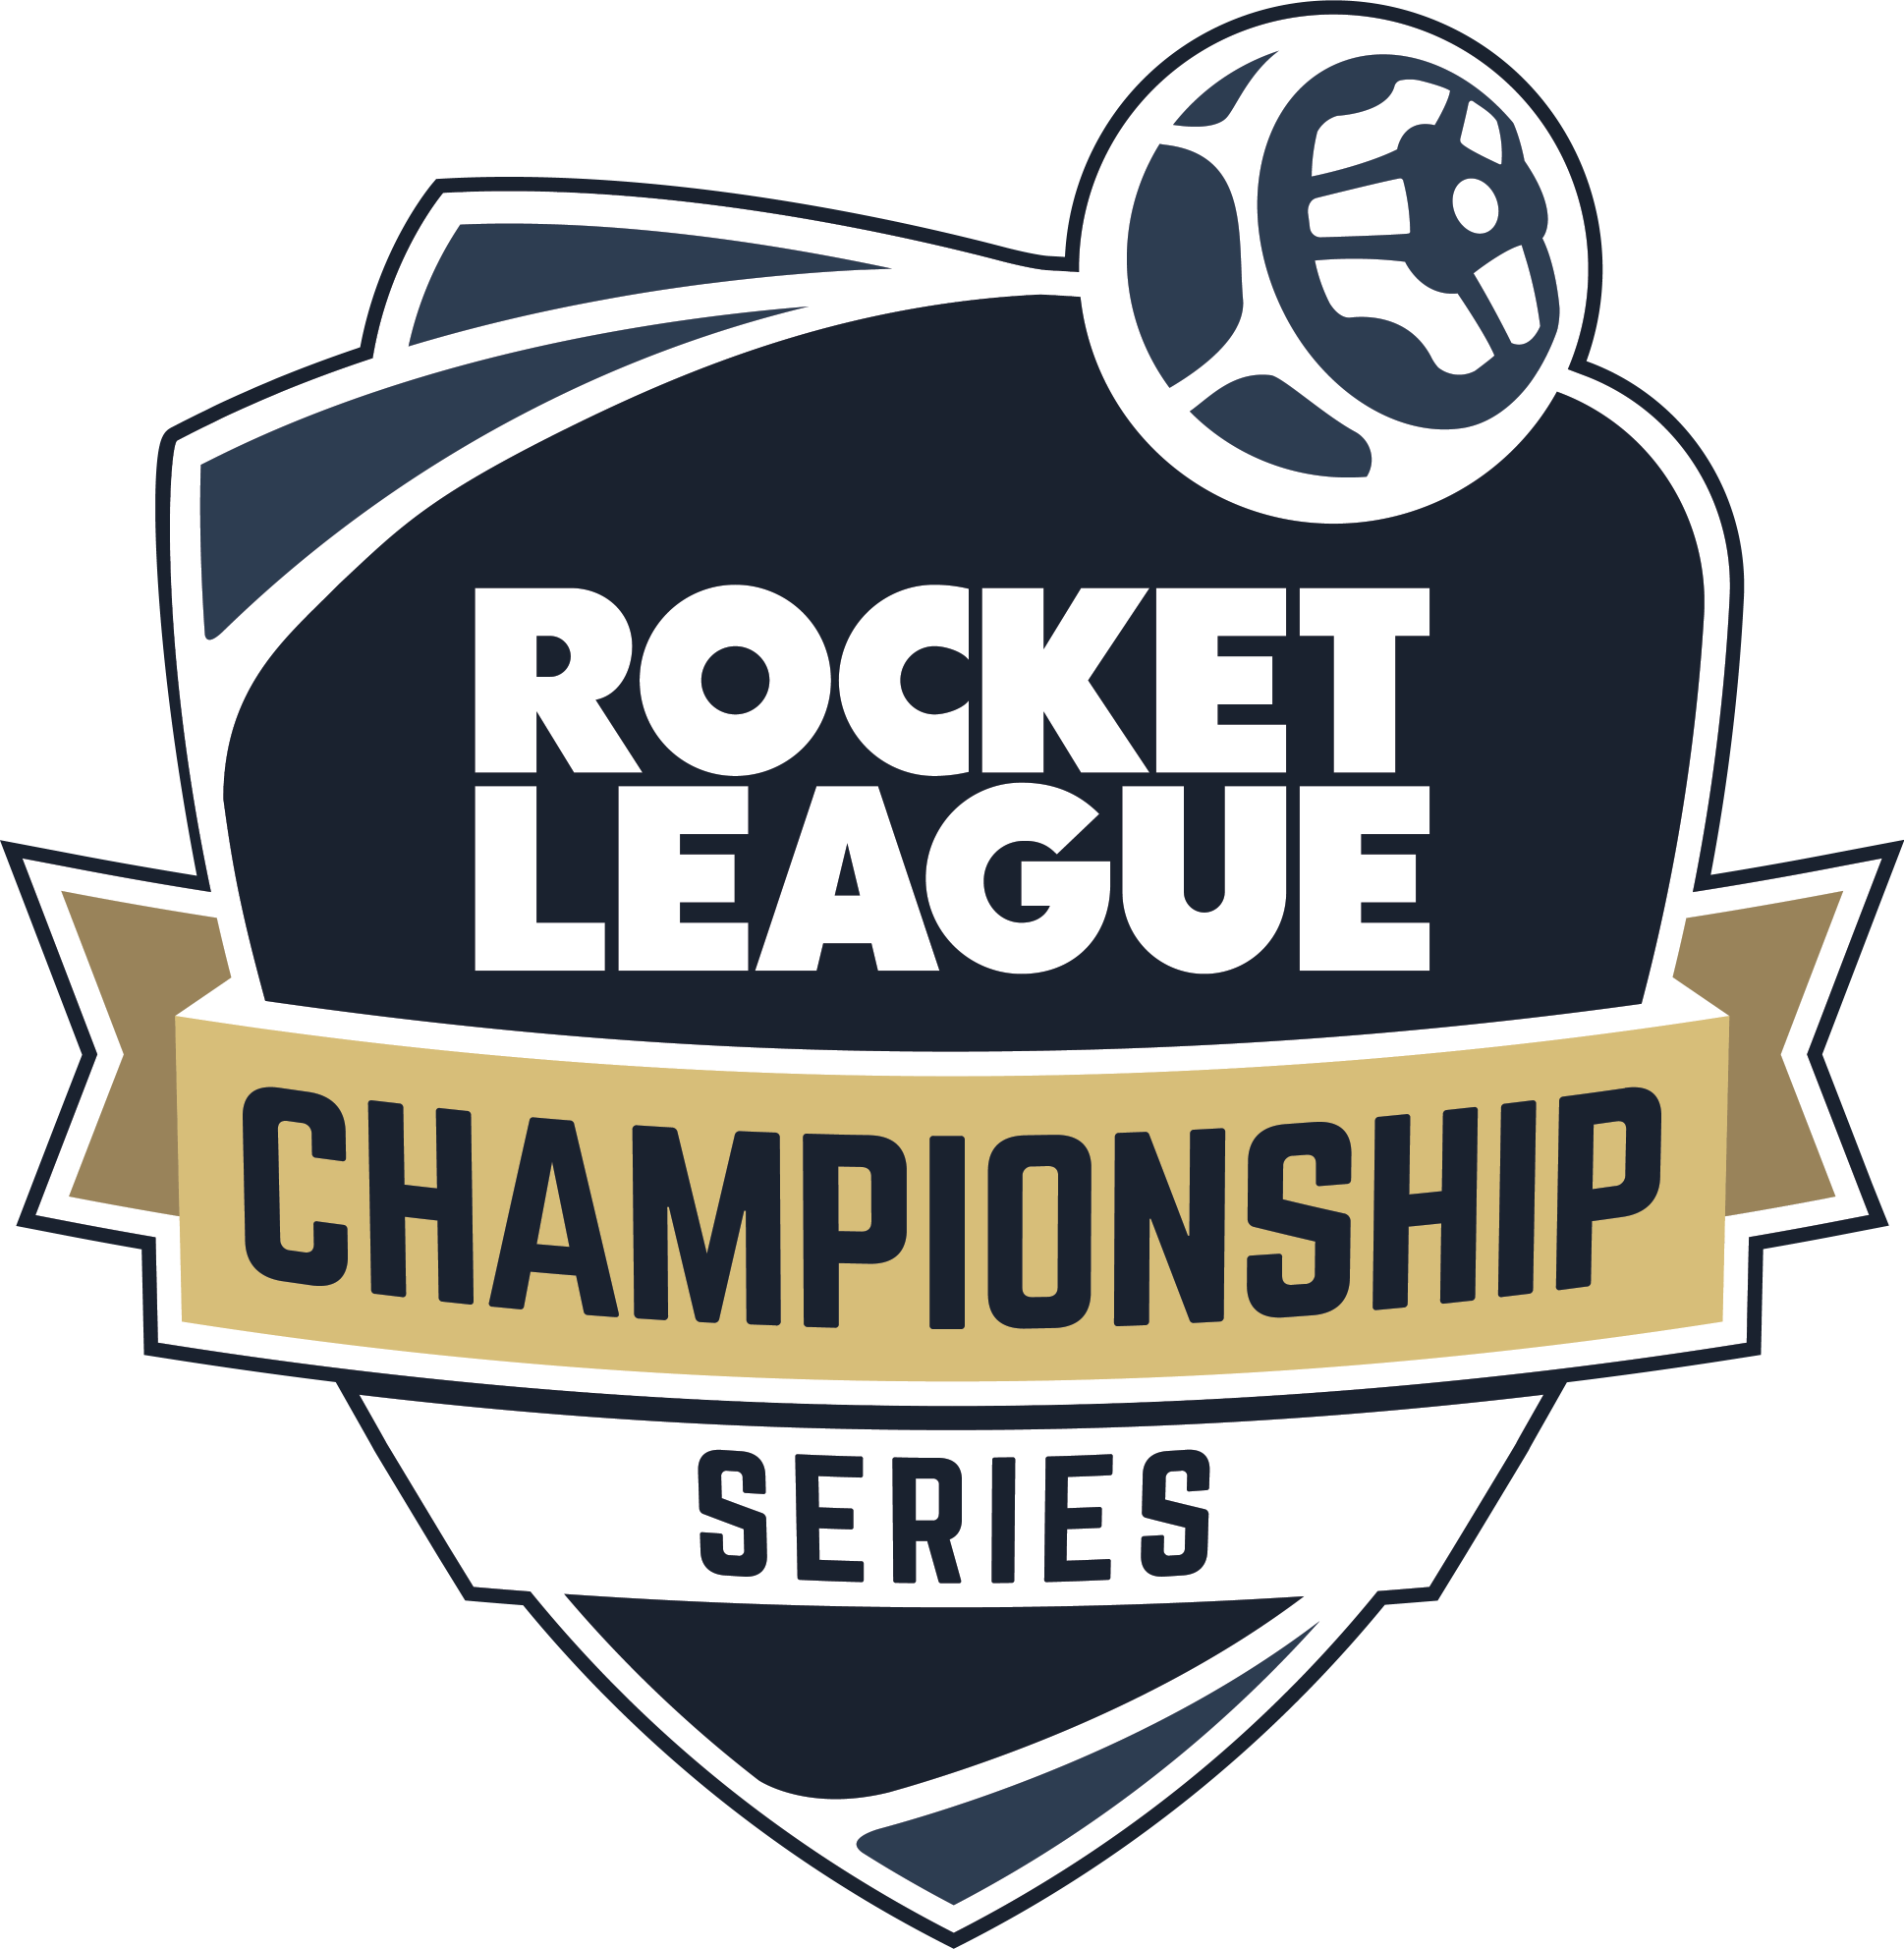 Rocket League Championship Series logo